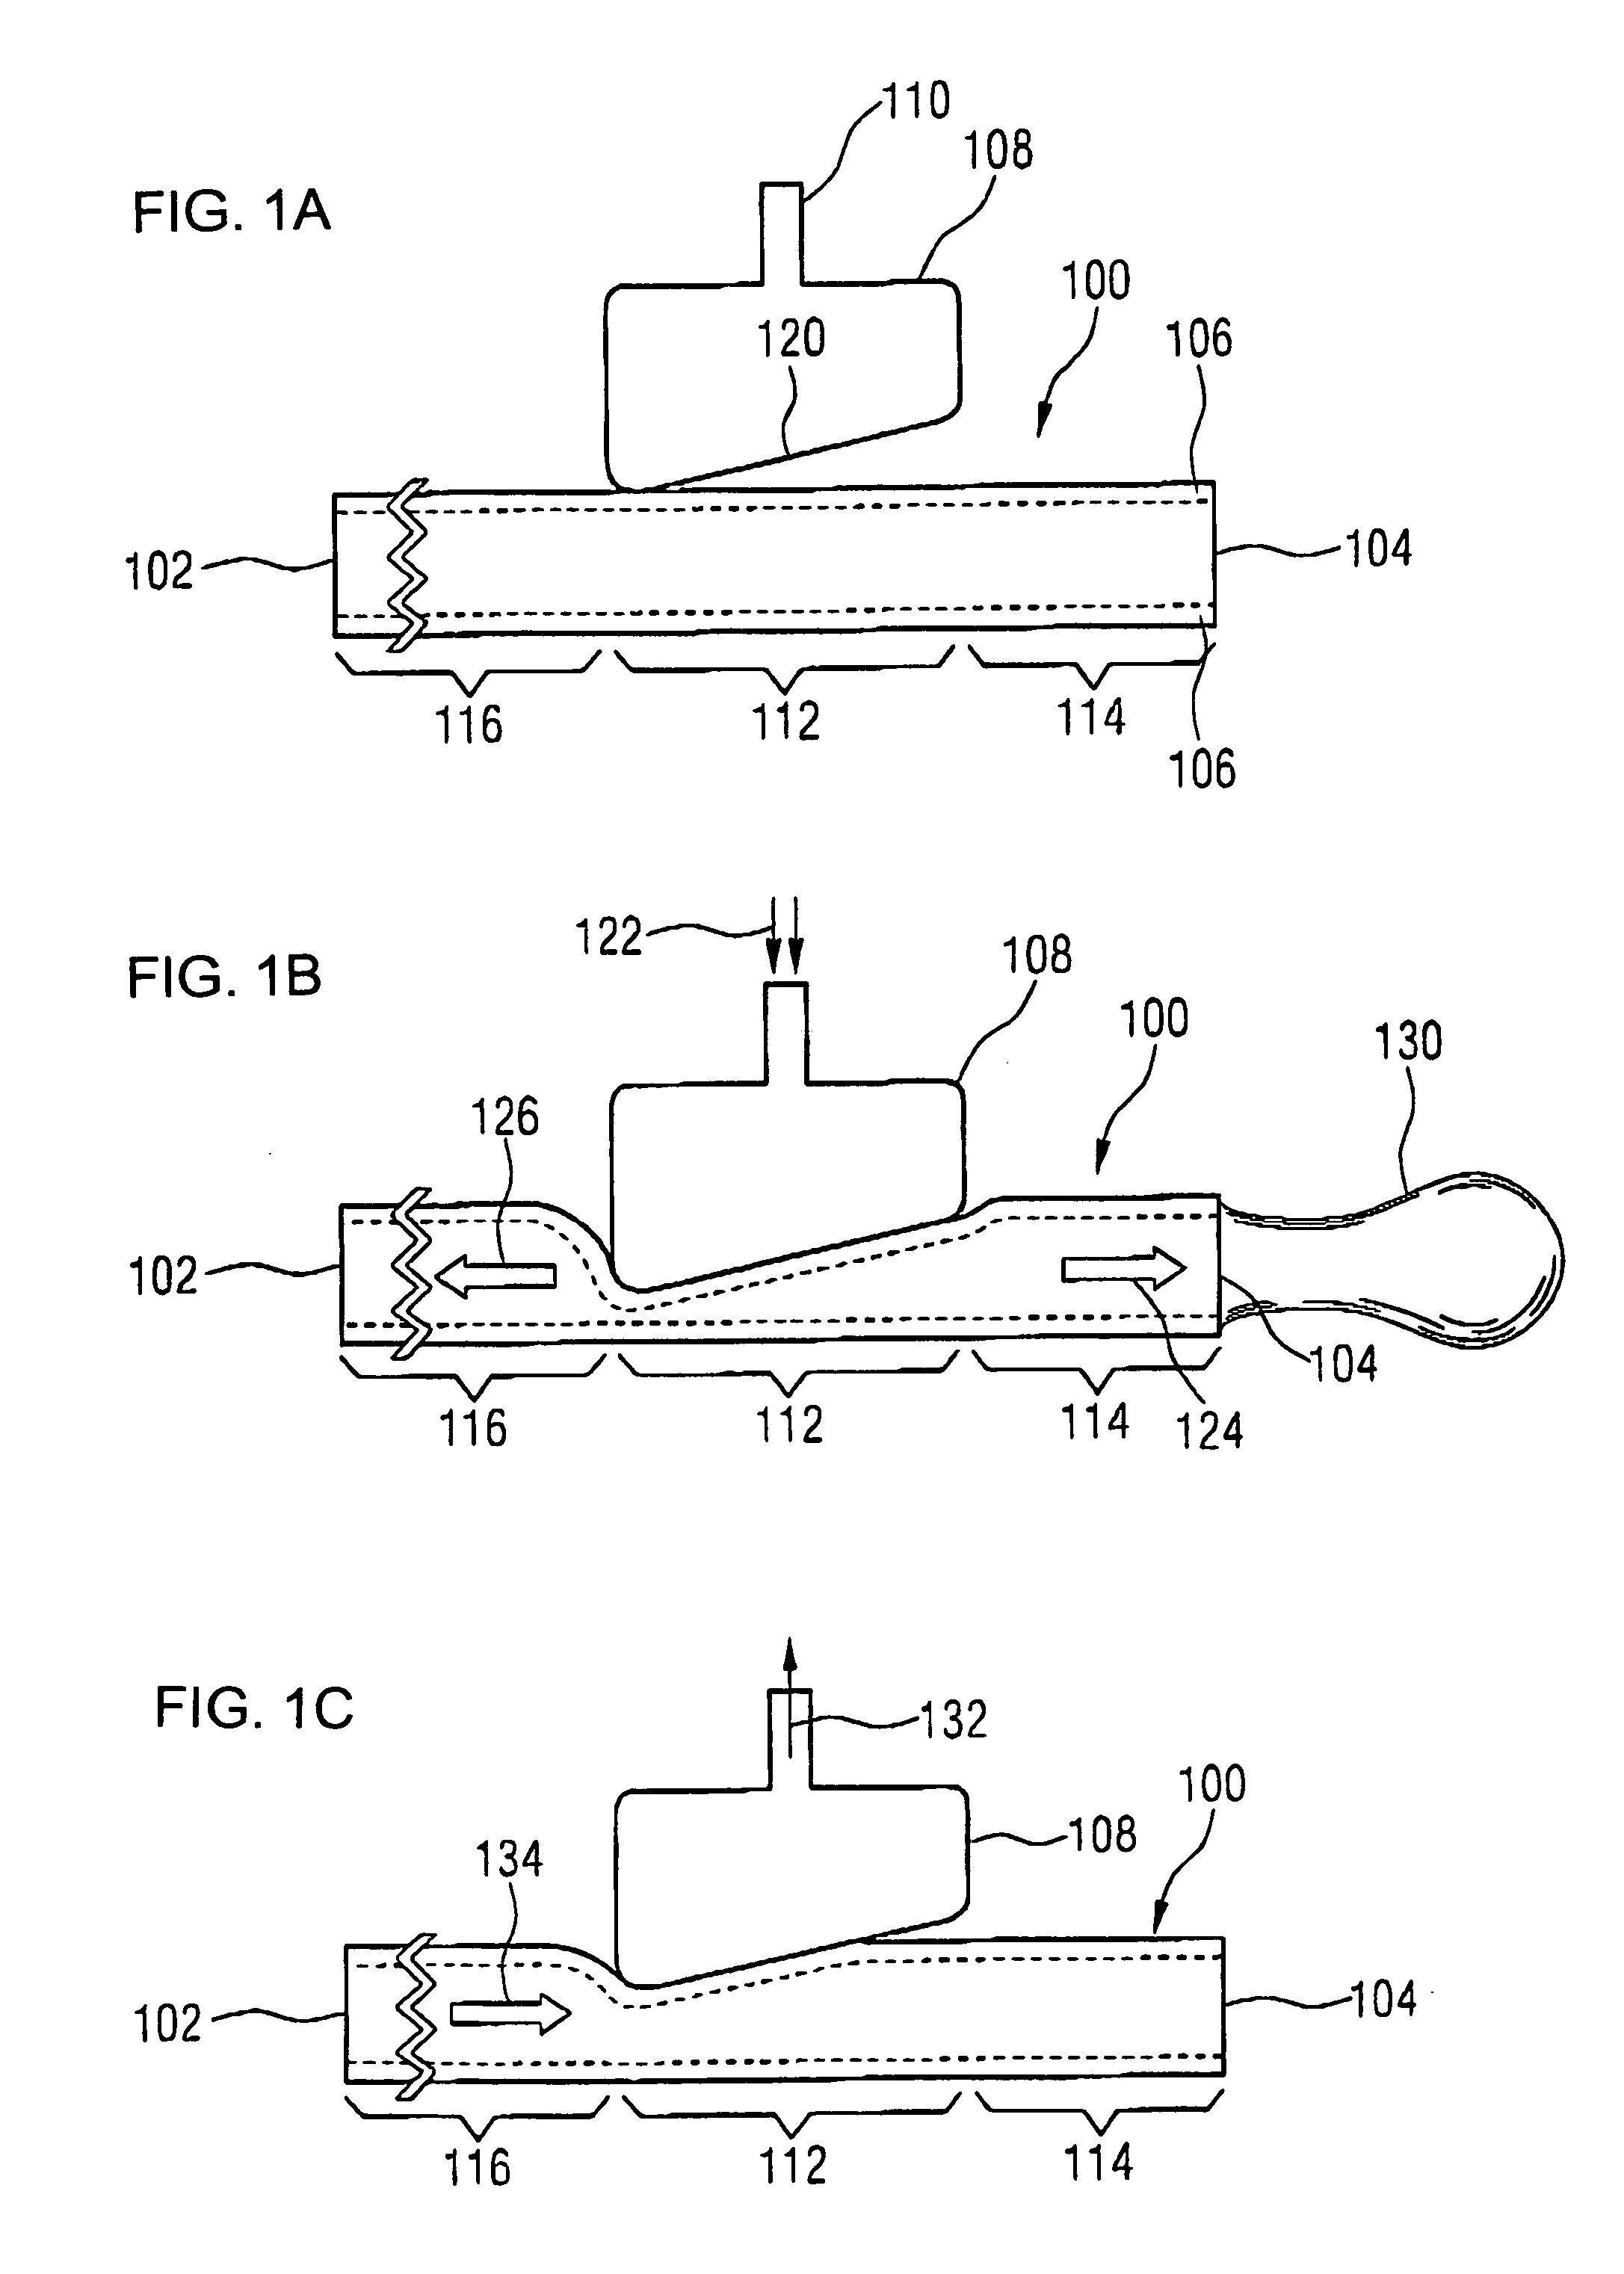 Microdosing apparatus and method for dosed dispensing of liquids